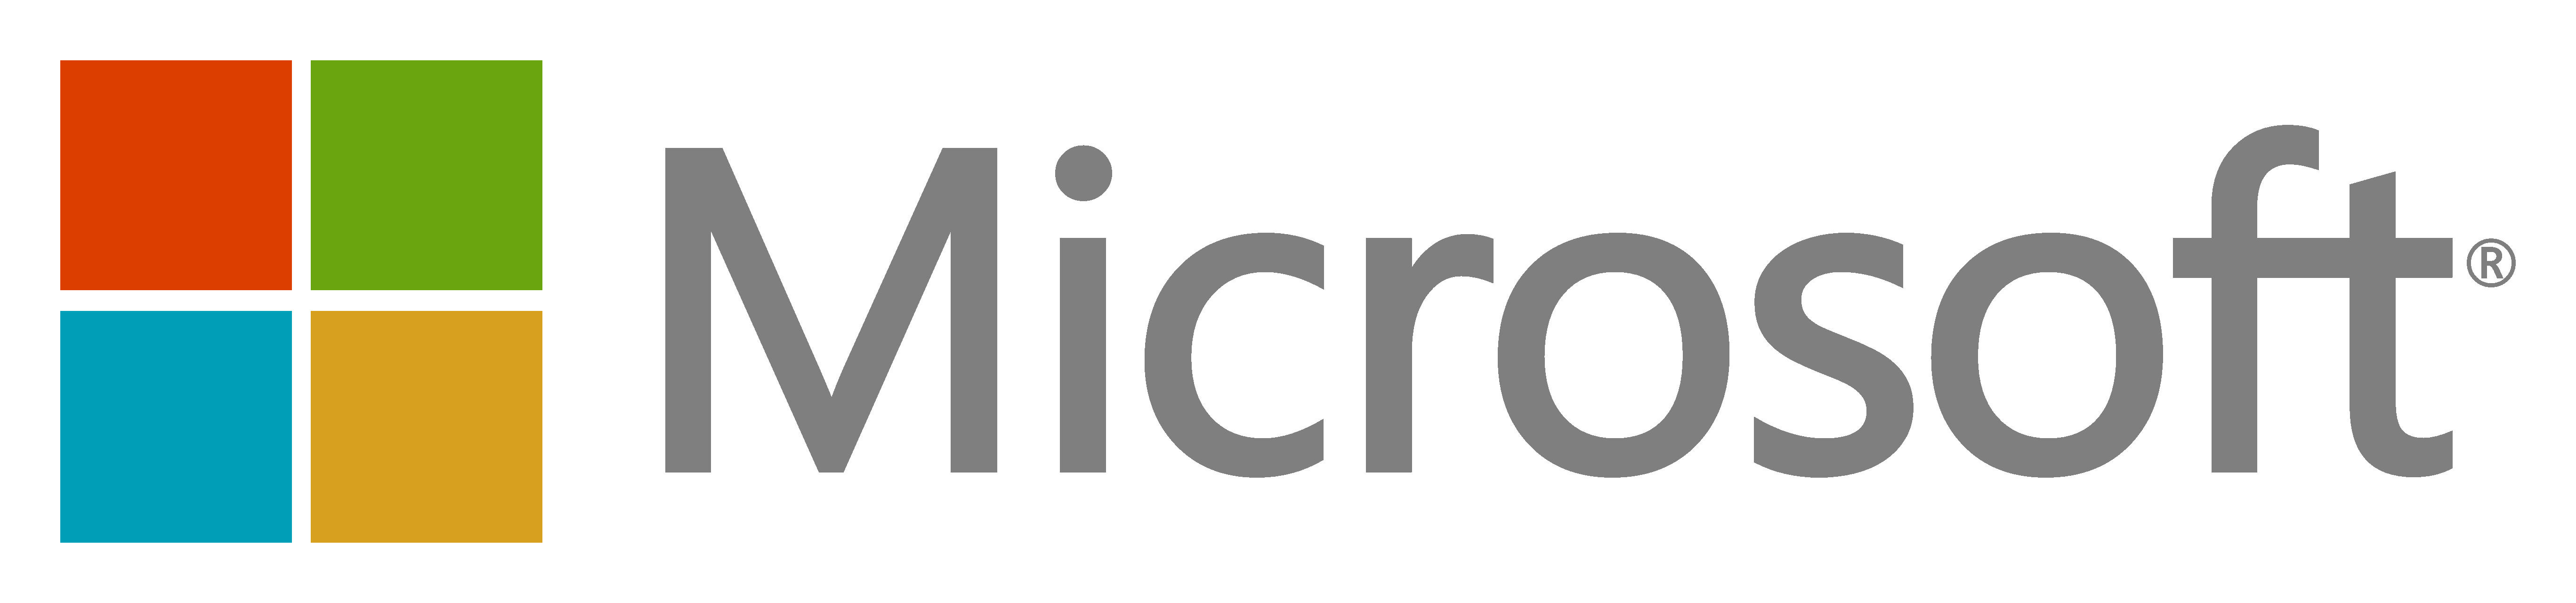 microsoft logo transparent